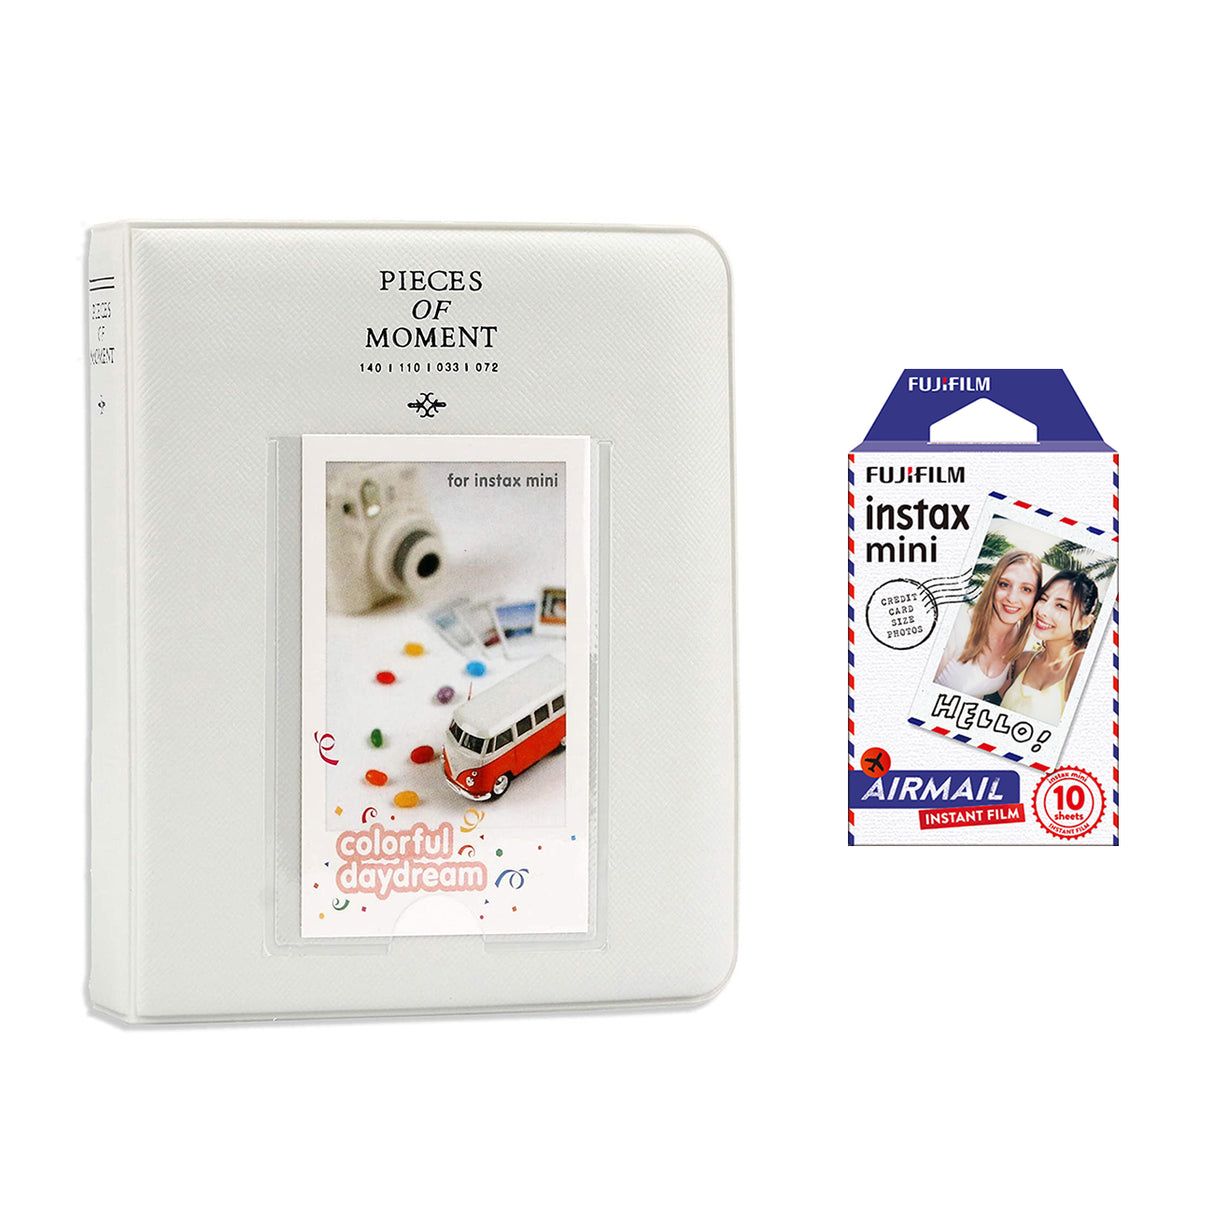 Fujifilm Instax Mini 10X1 airmail Instant Film with Instax Time Photo Album 64 Sheets Ice white